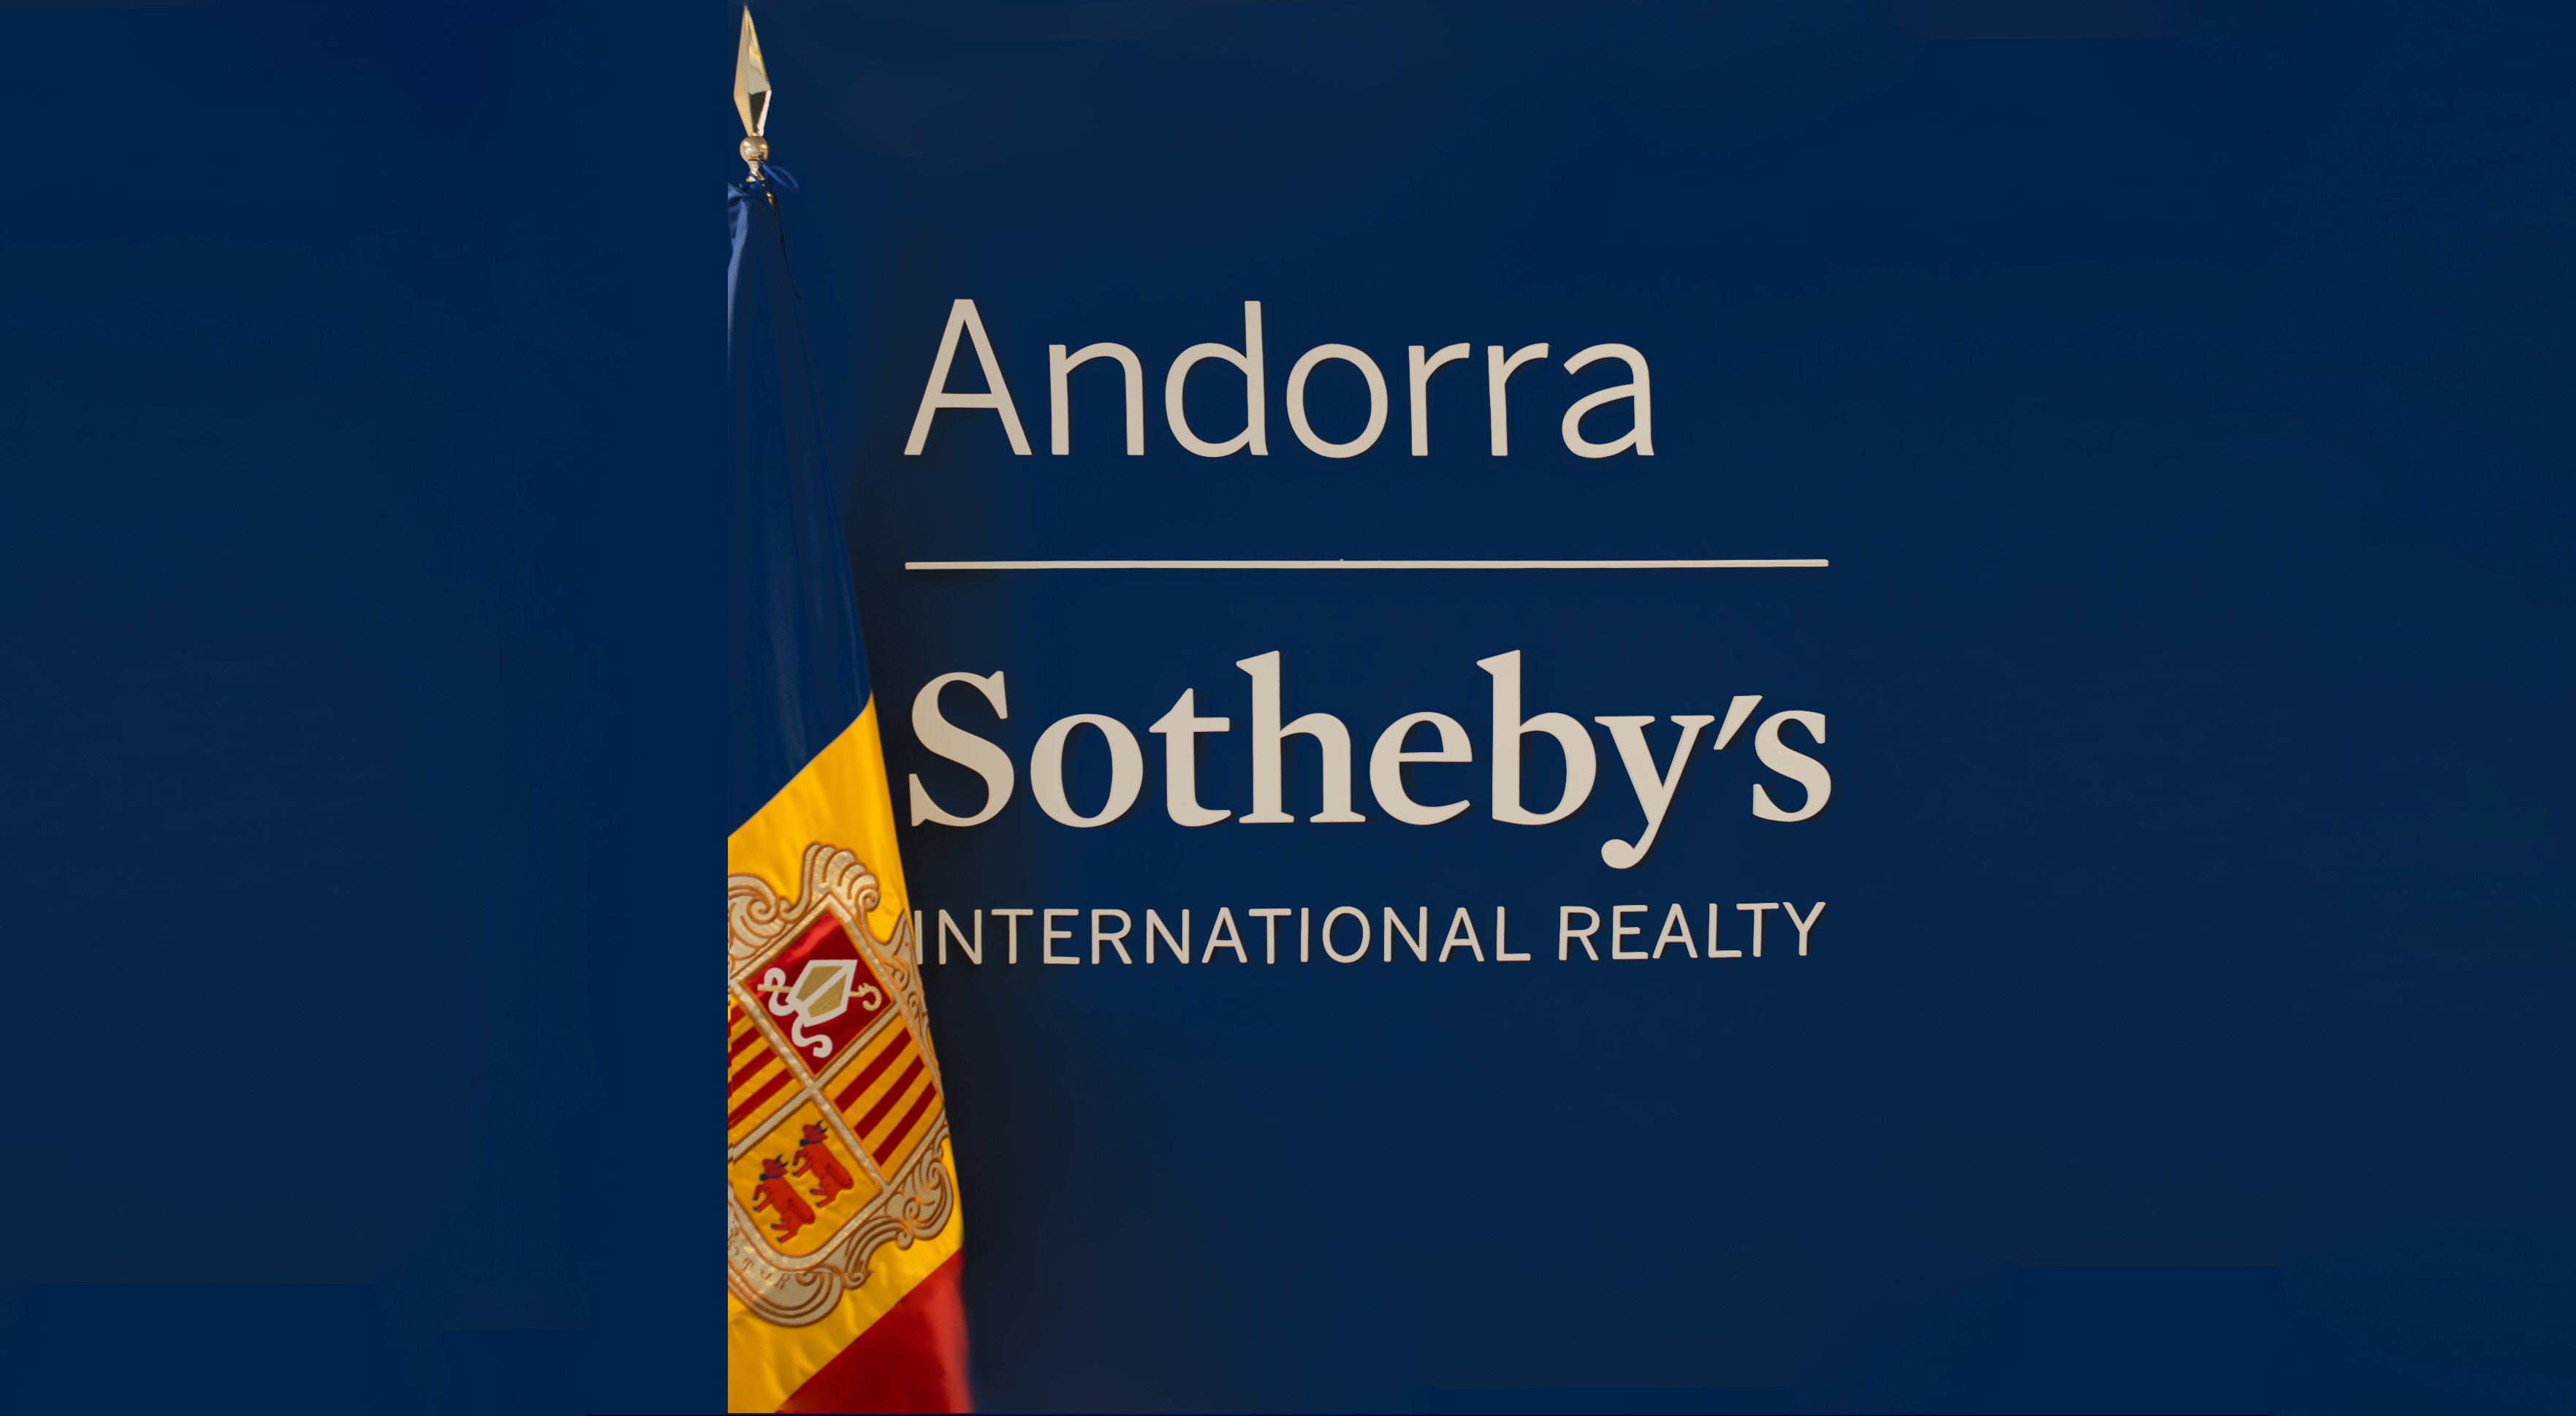 Andorra Sotheby's International Realty